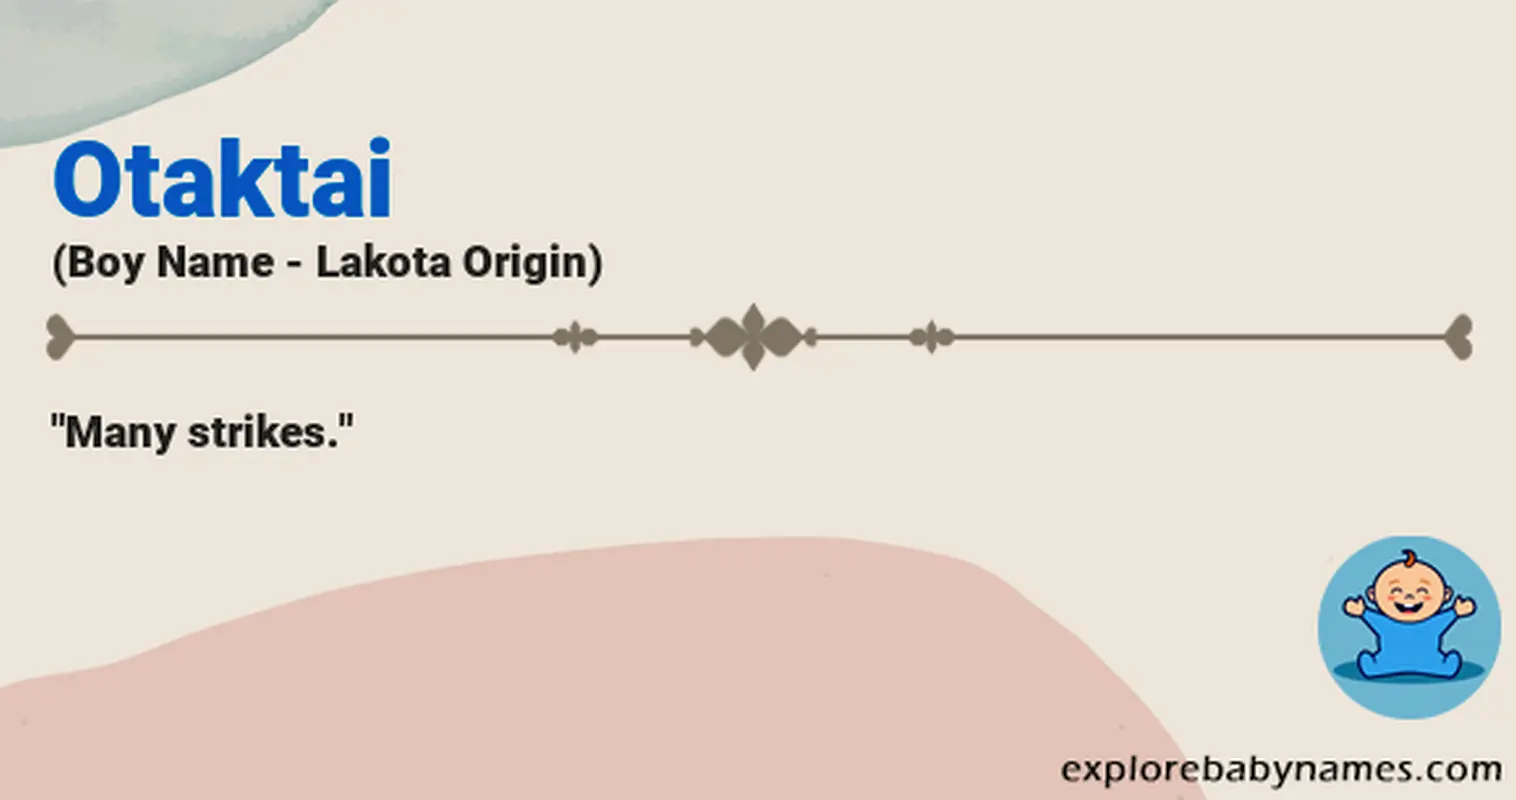 Meaning of Otaktai